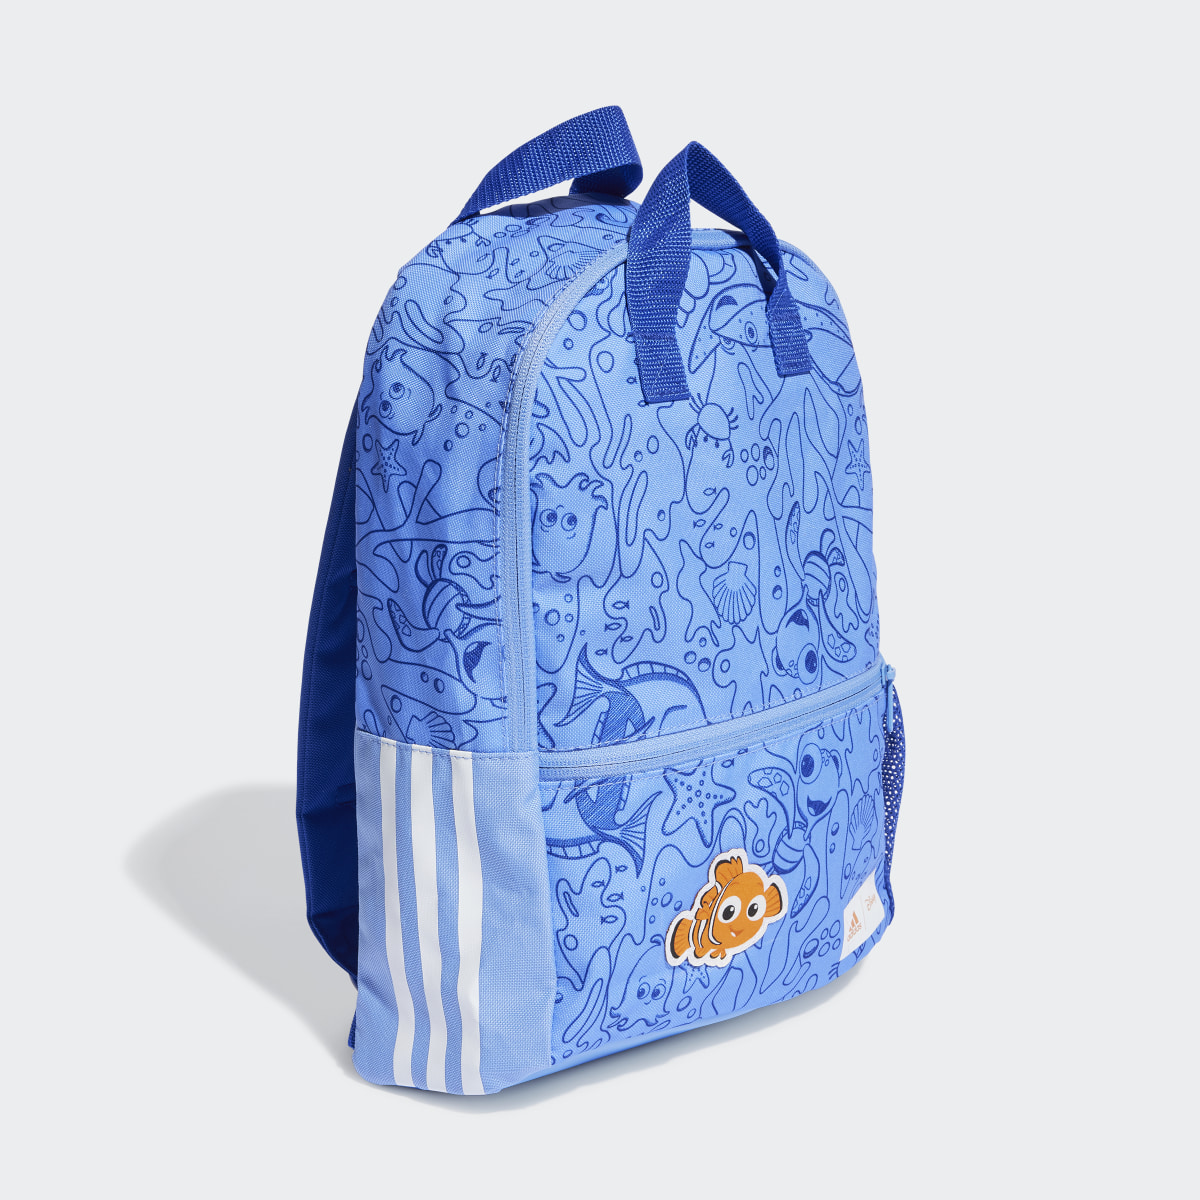 Adidas x Disney Pixar Finding Nemo Backpack. 4